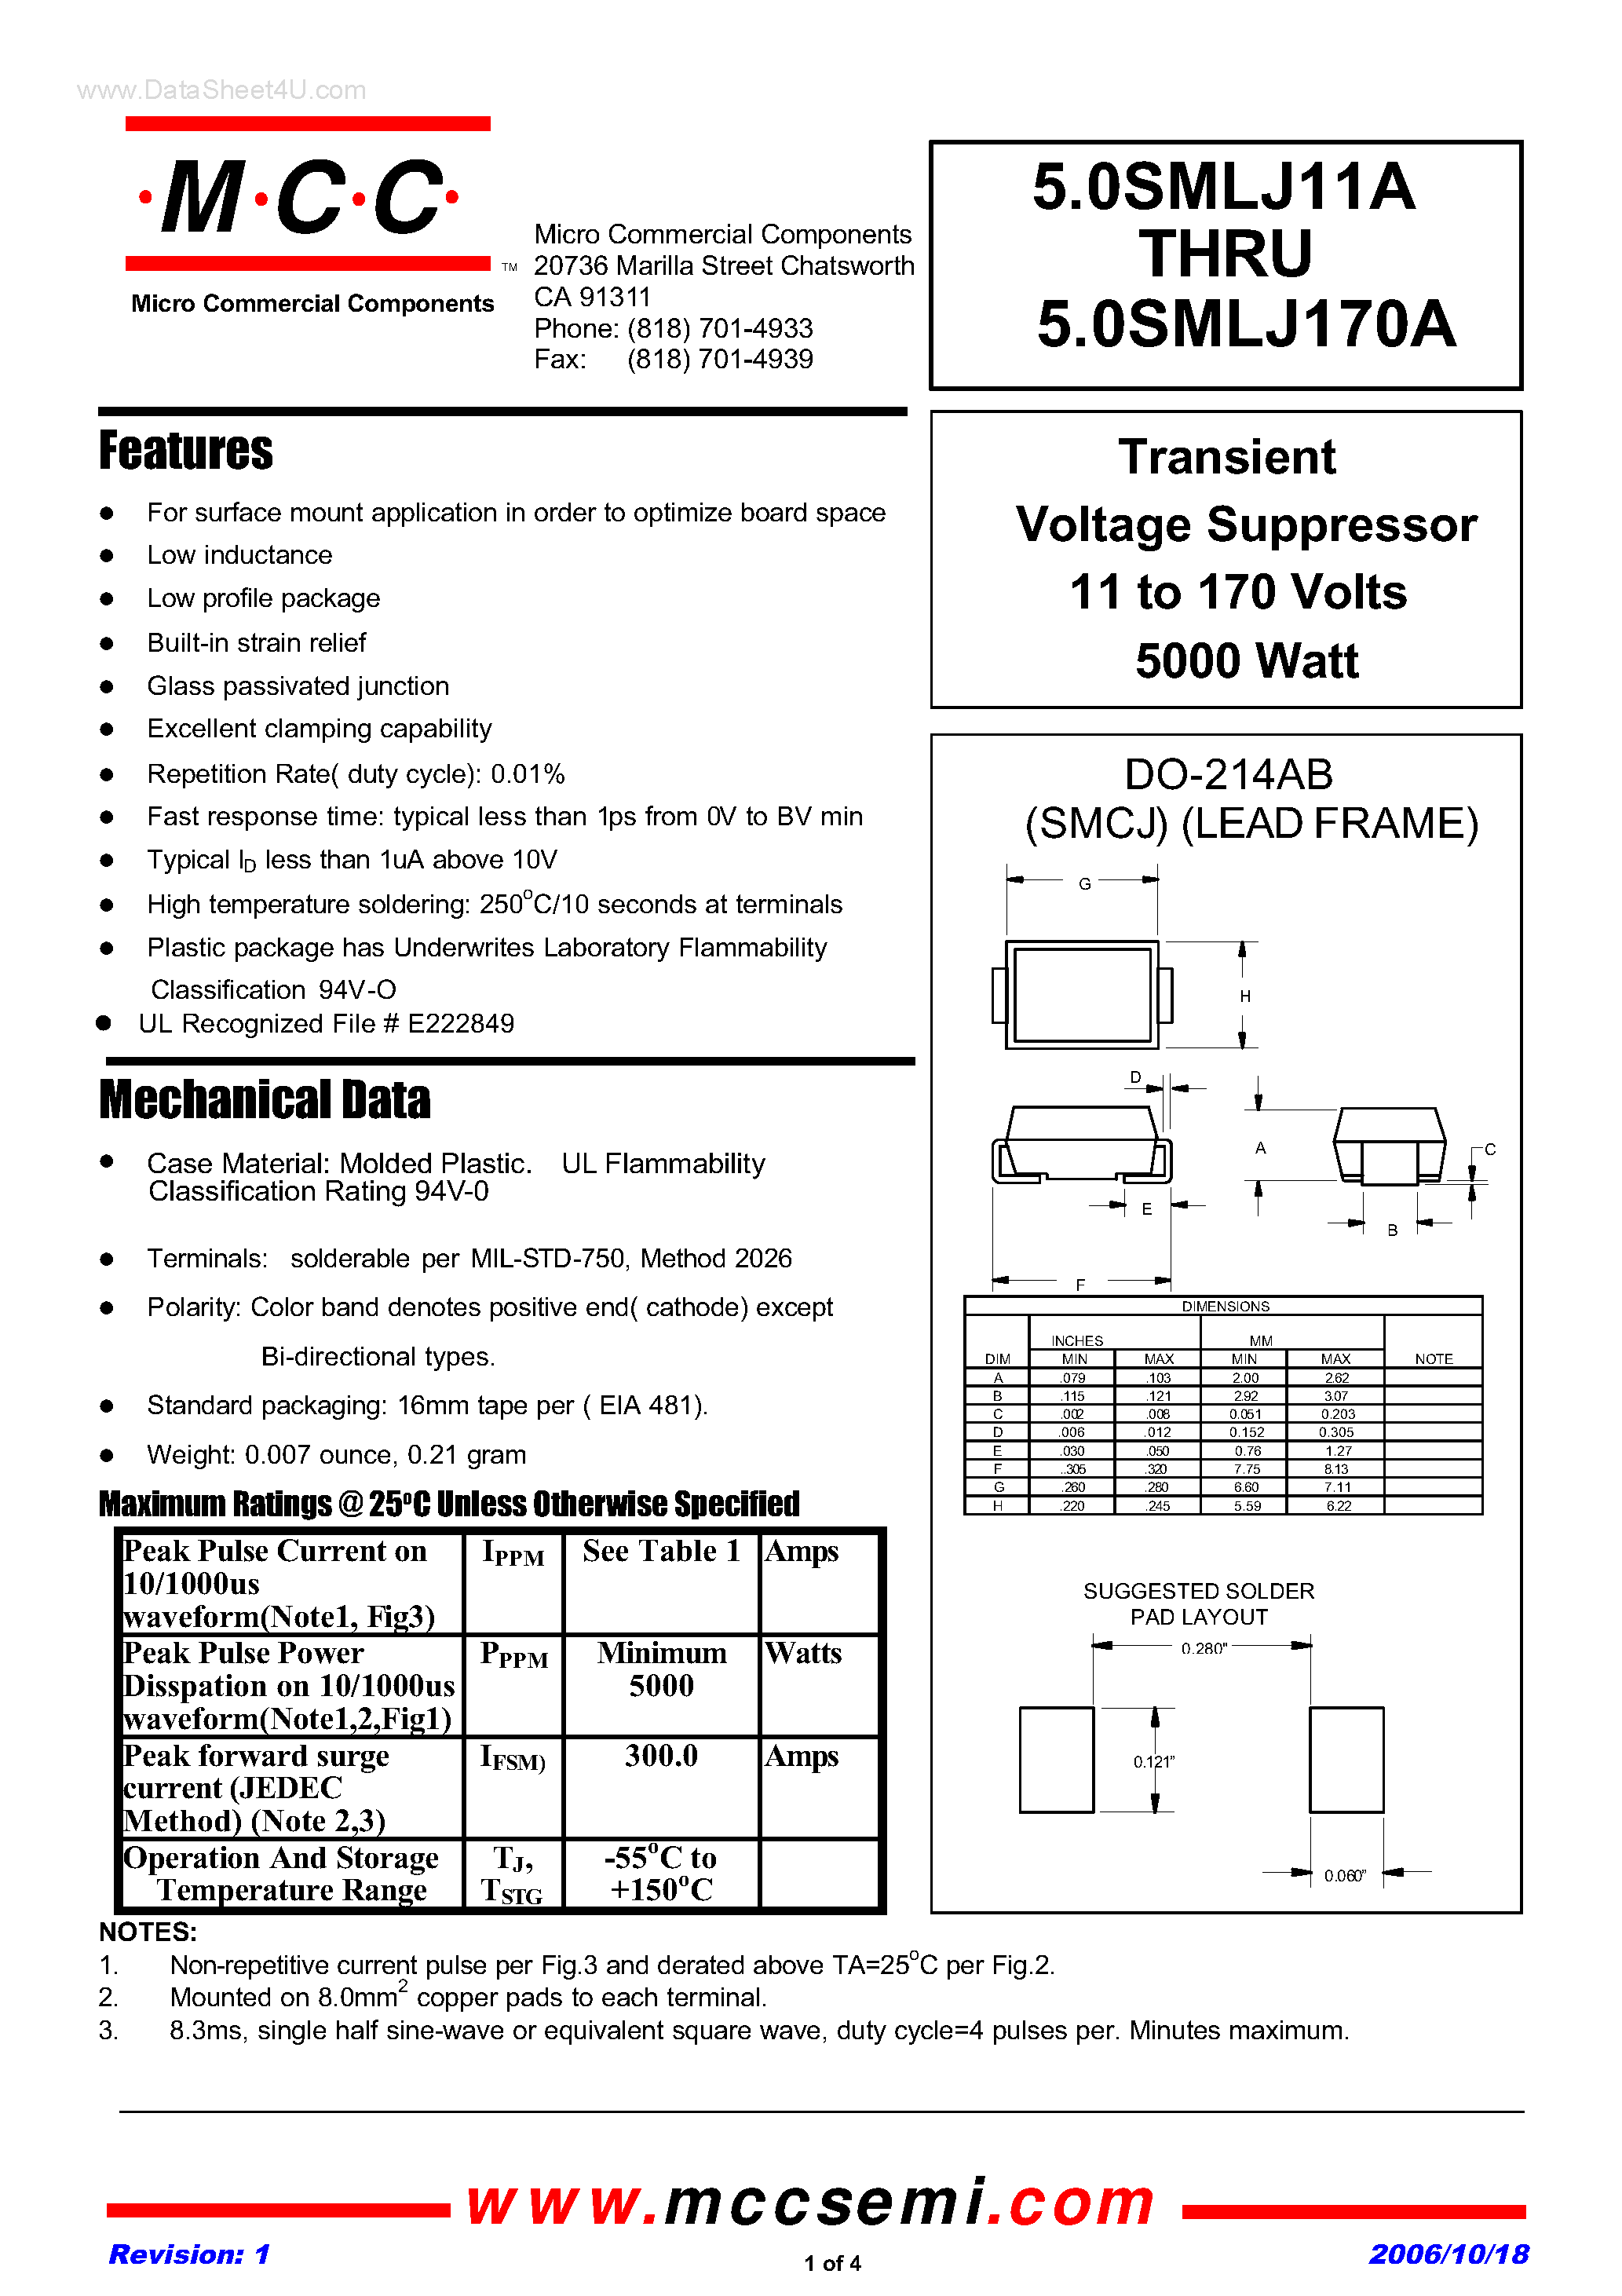 Datasheet 5.0SMLJ11A - (5.0SMLJ11A - 5.0SMLJ170A) Transient Voltage Suppressor page 1